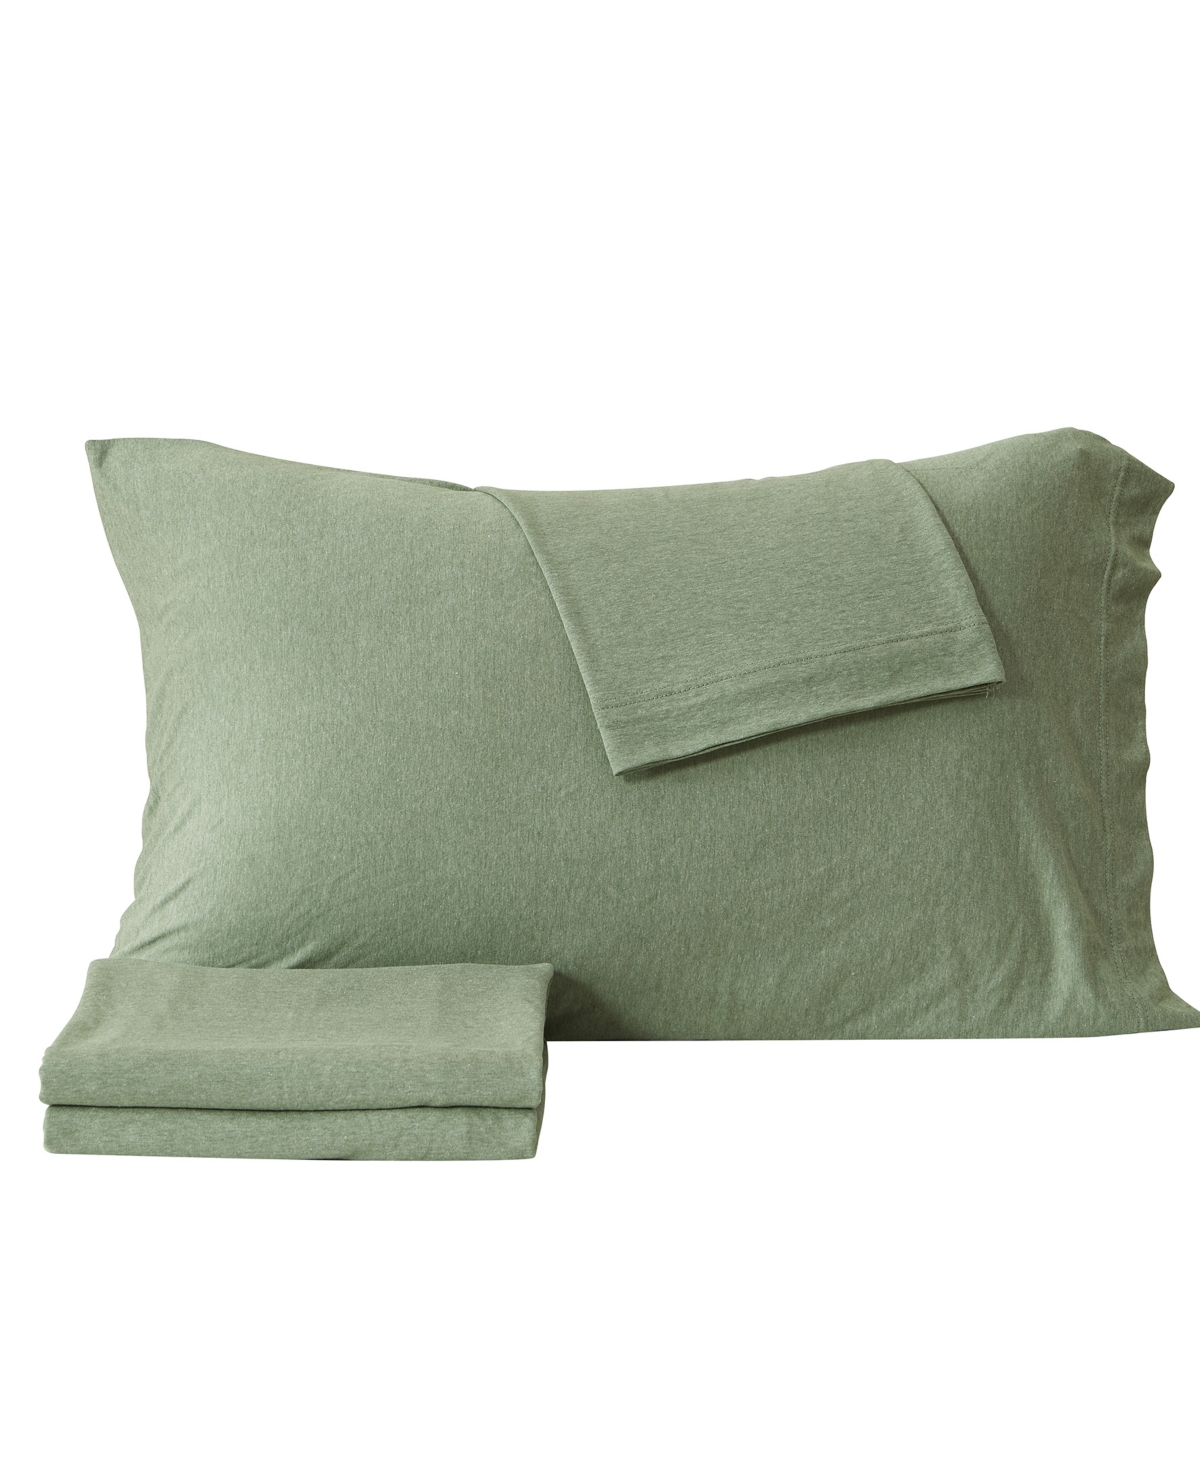 Premium Comforts Heathered Melange T-shirt Jersey Knit Cotton Blend 4 Piece Sheet Set, Twin Xl In Heathered Olive